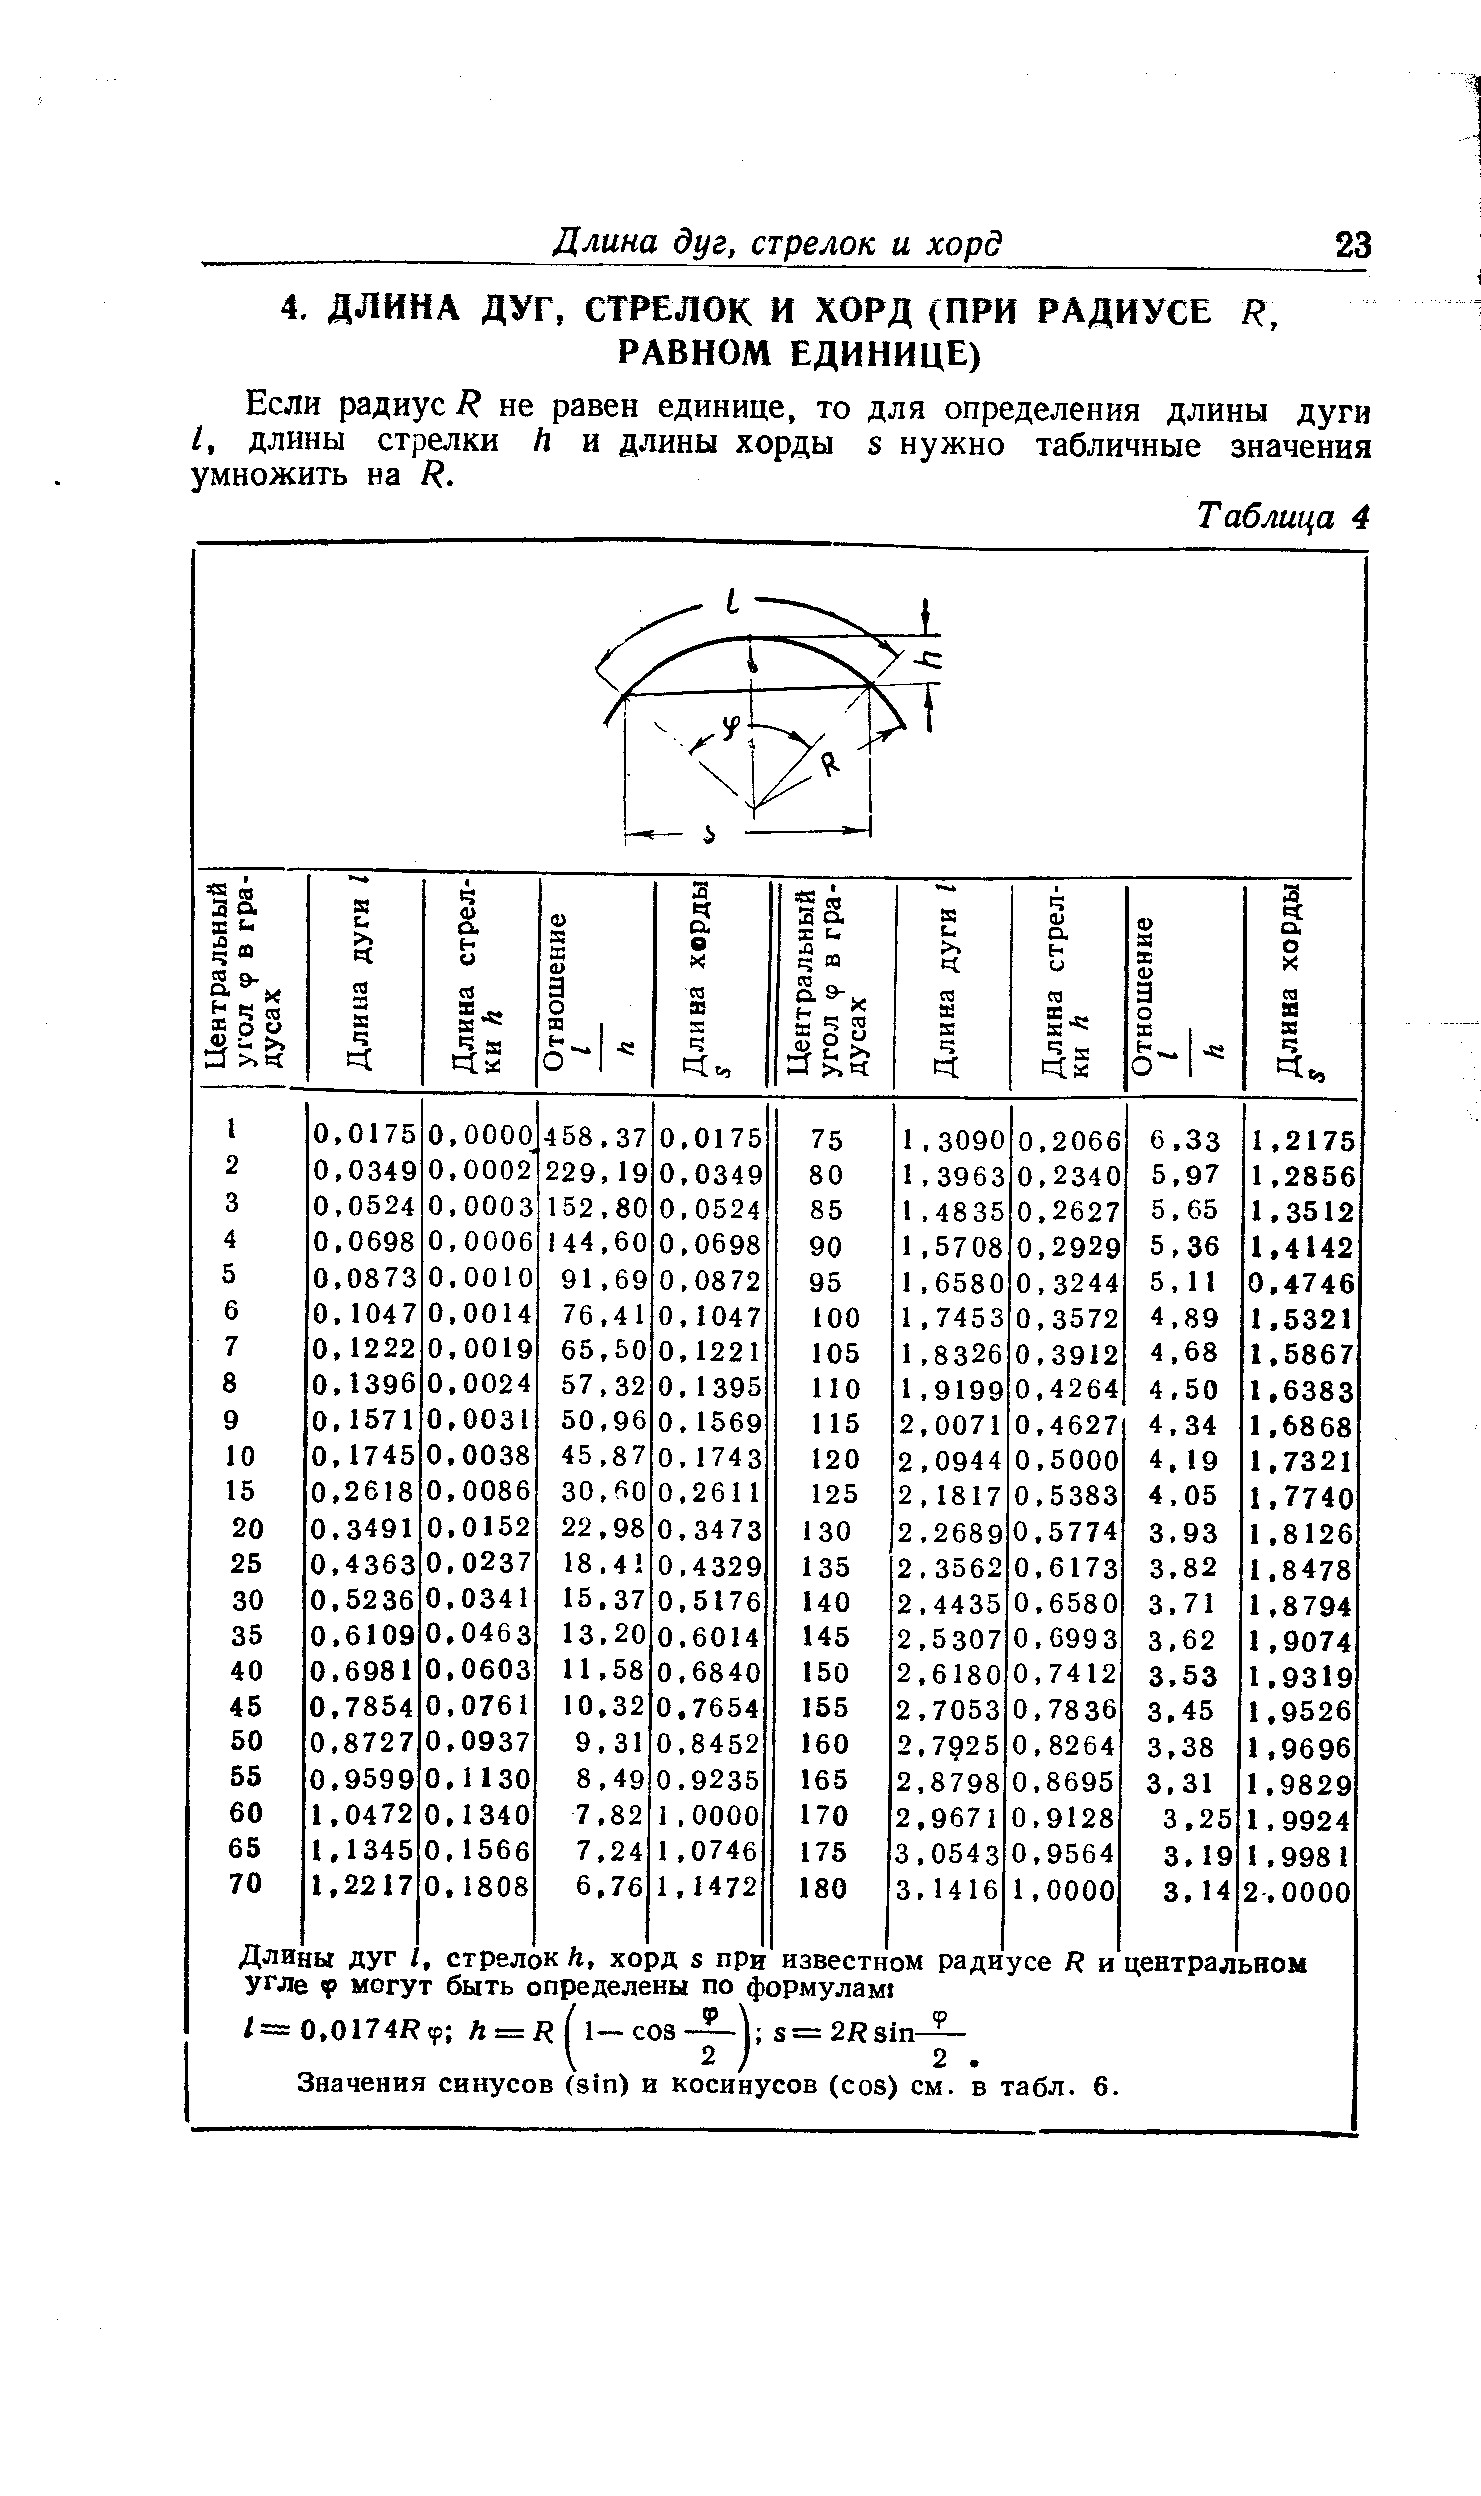 Значения синусов (sin) и косинусов ( os) см. в табл. 6.
